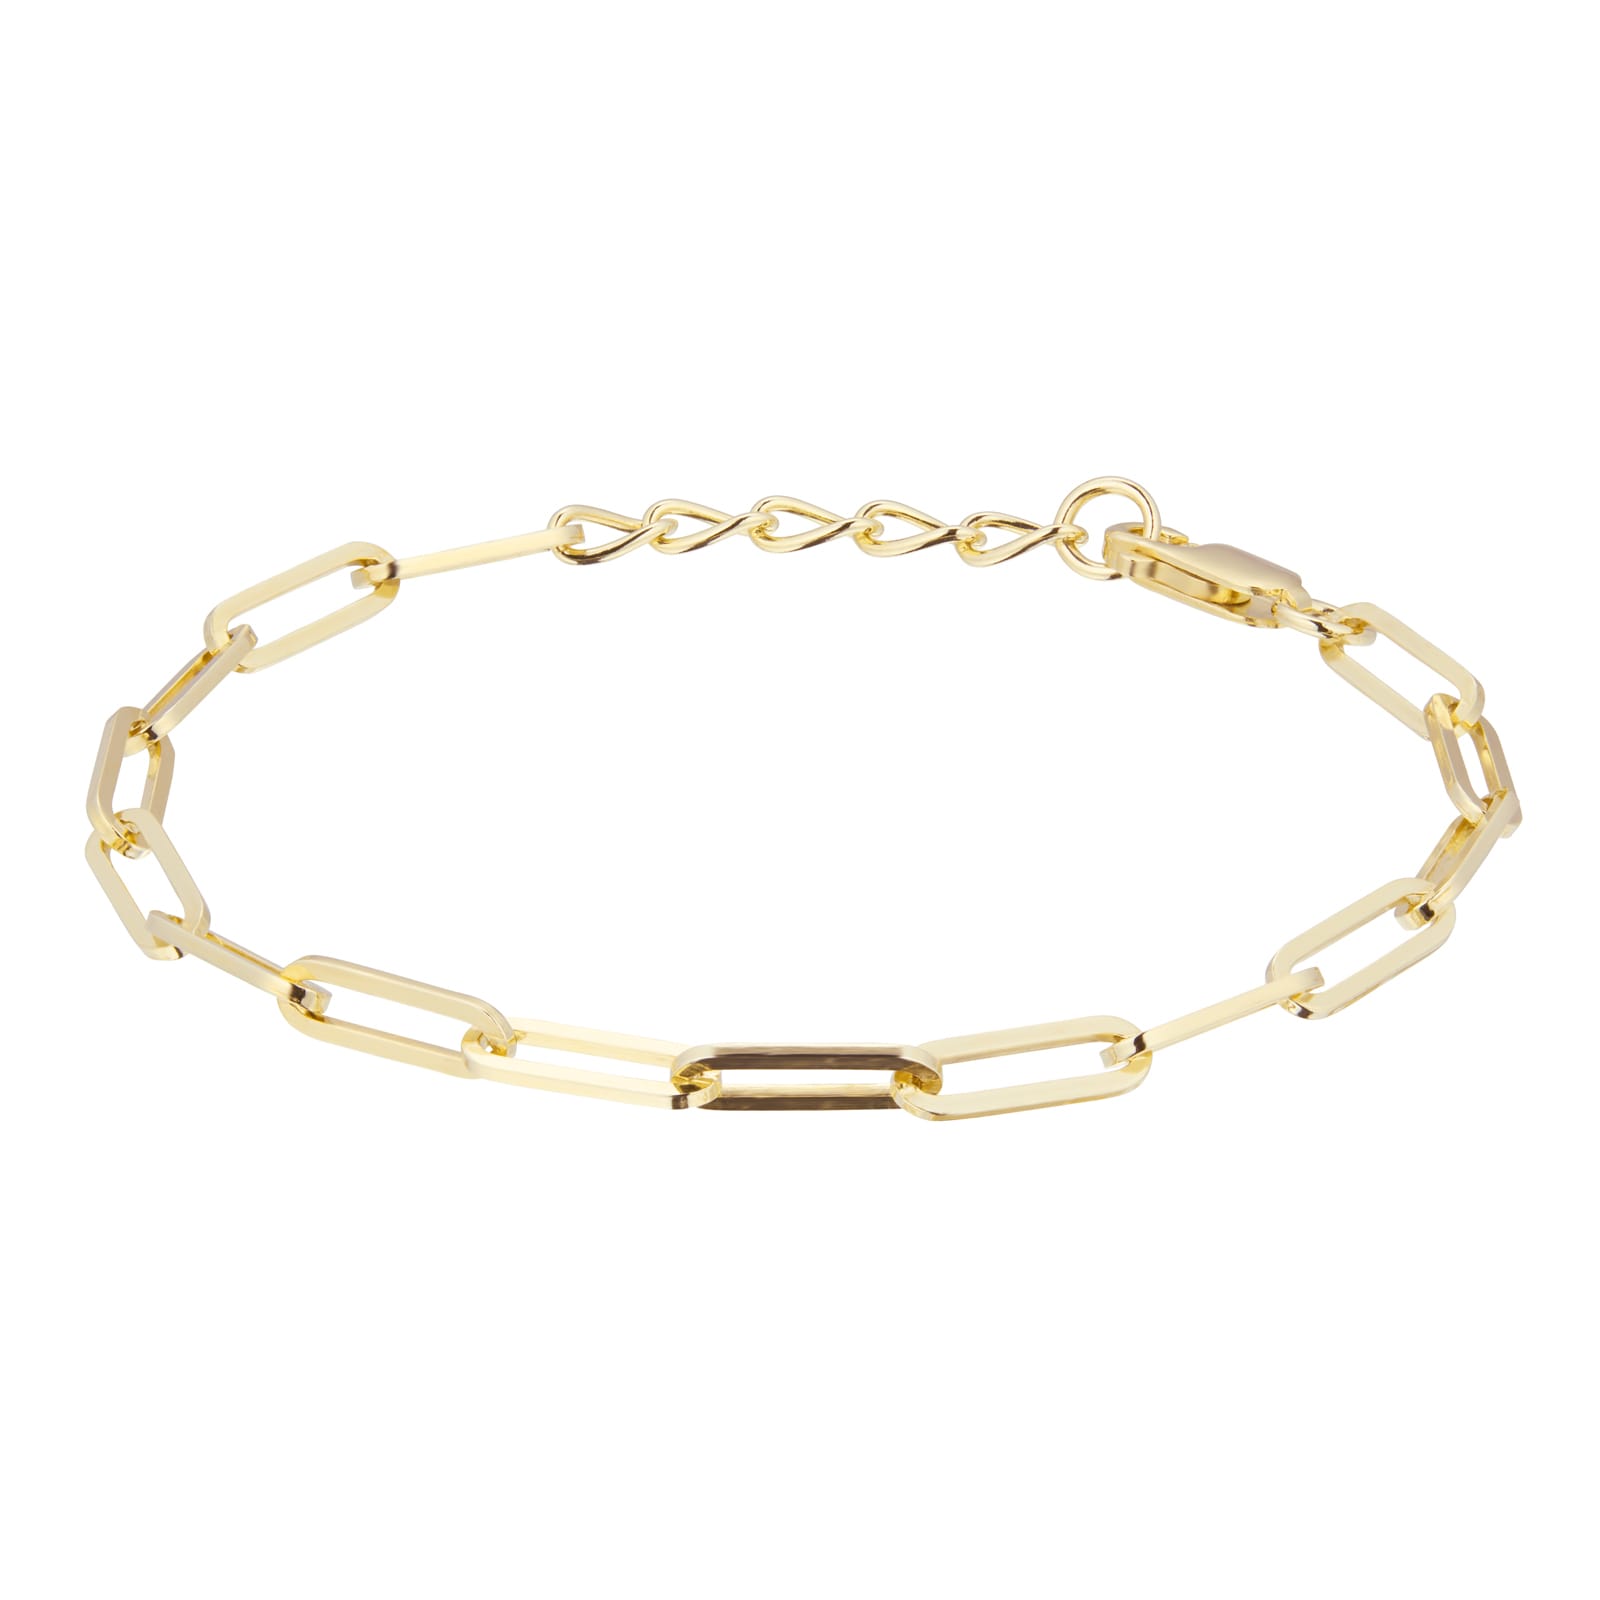 Goldsmiths 9ct Yellow Gold Rectangular Full Link Chain Bracelet GSQTL9007GS